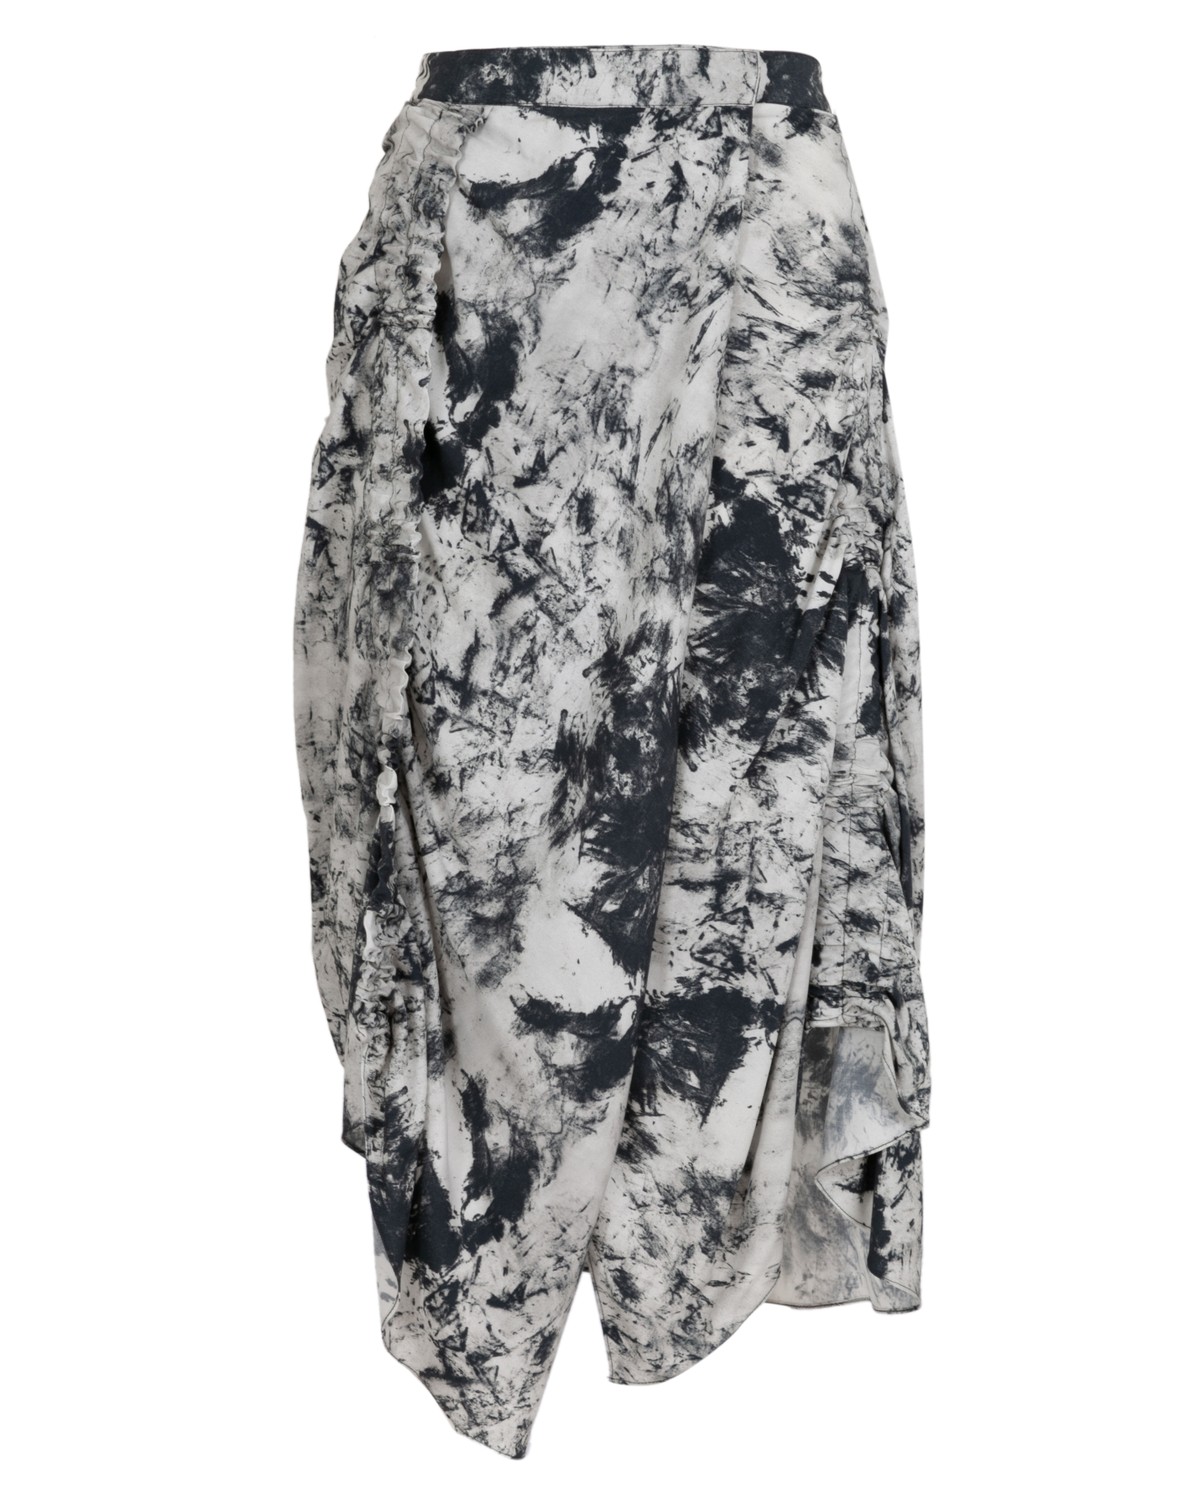 saia midi estampada com franzido | printed modal gathered skirt